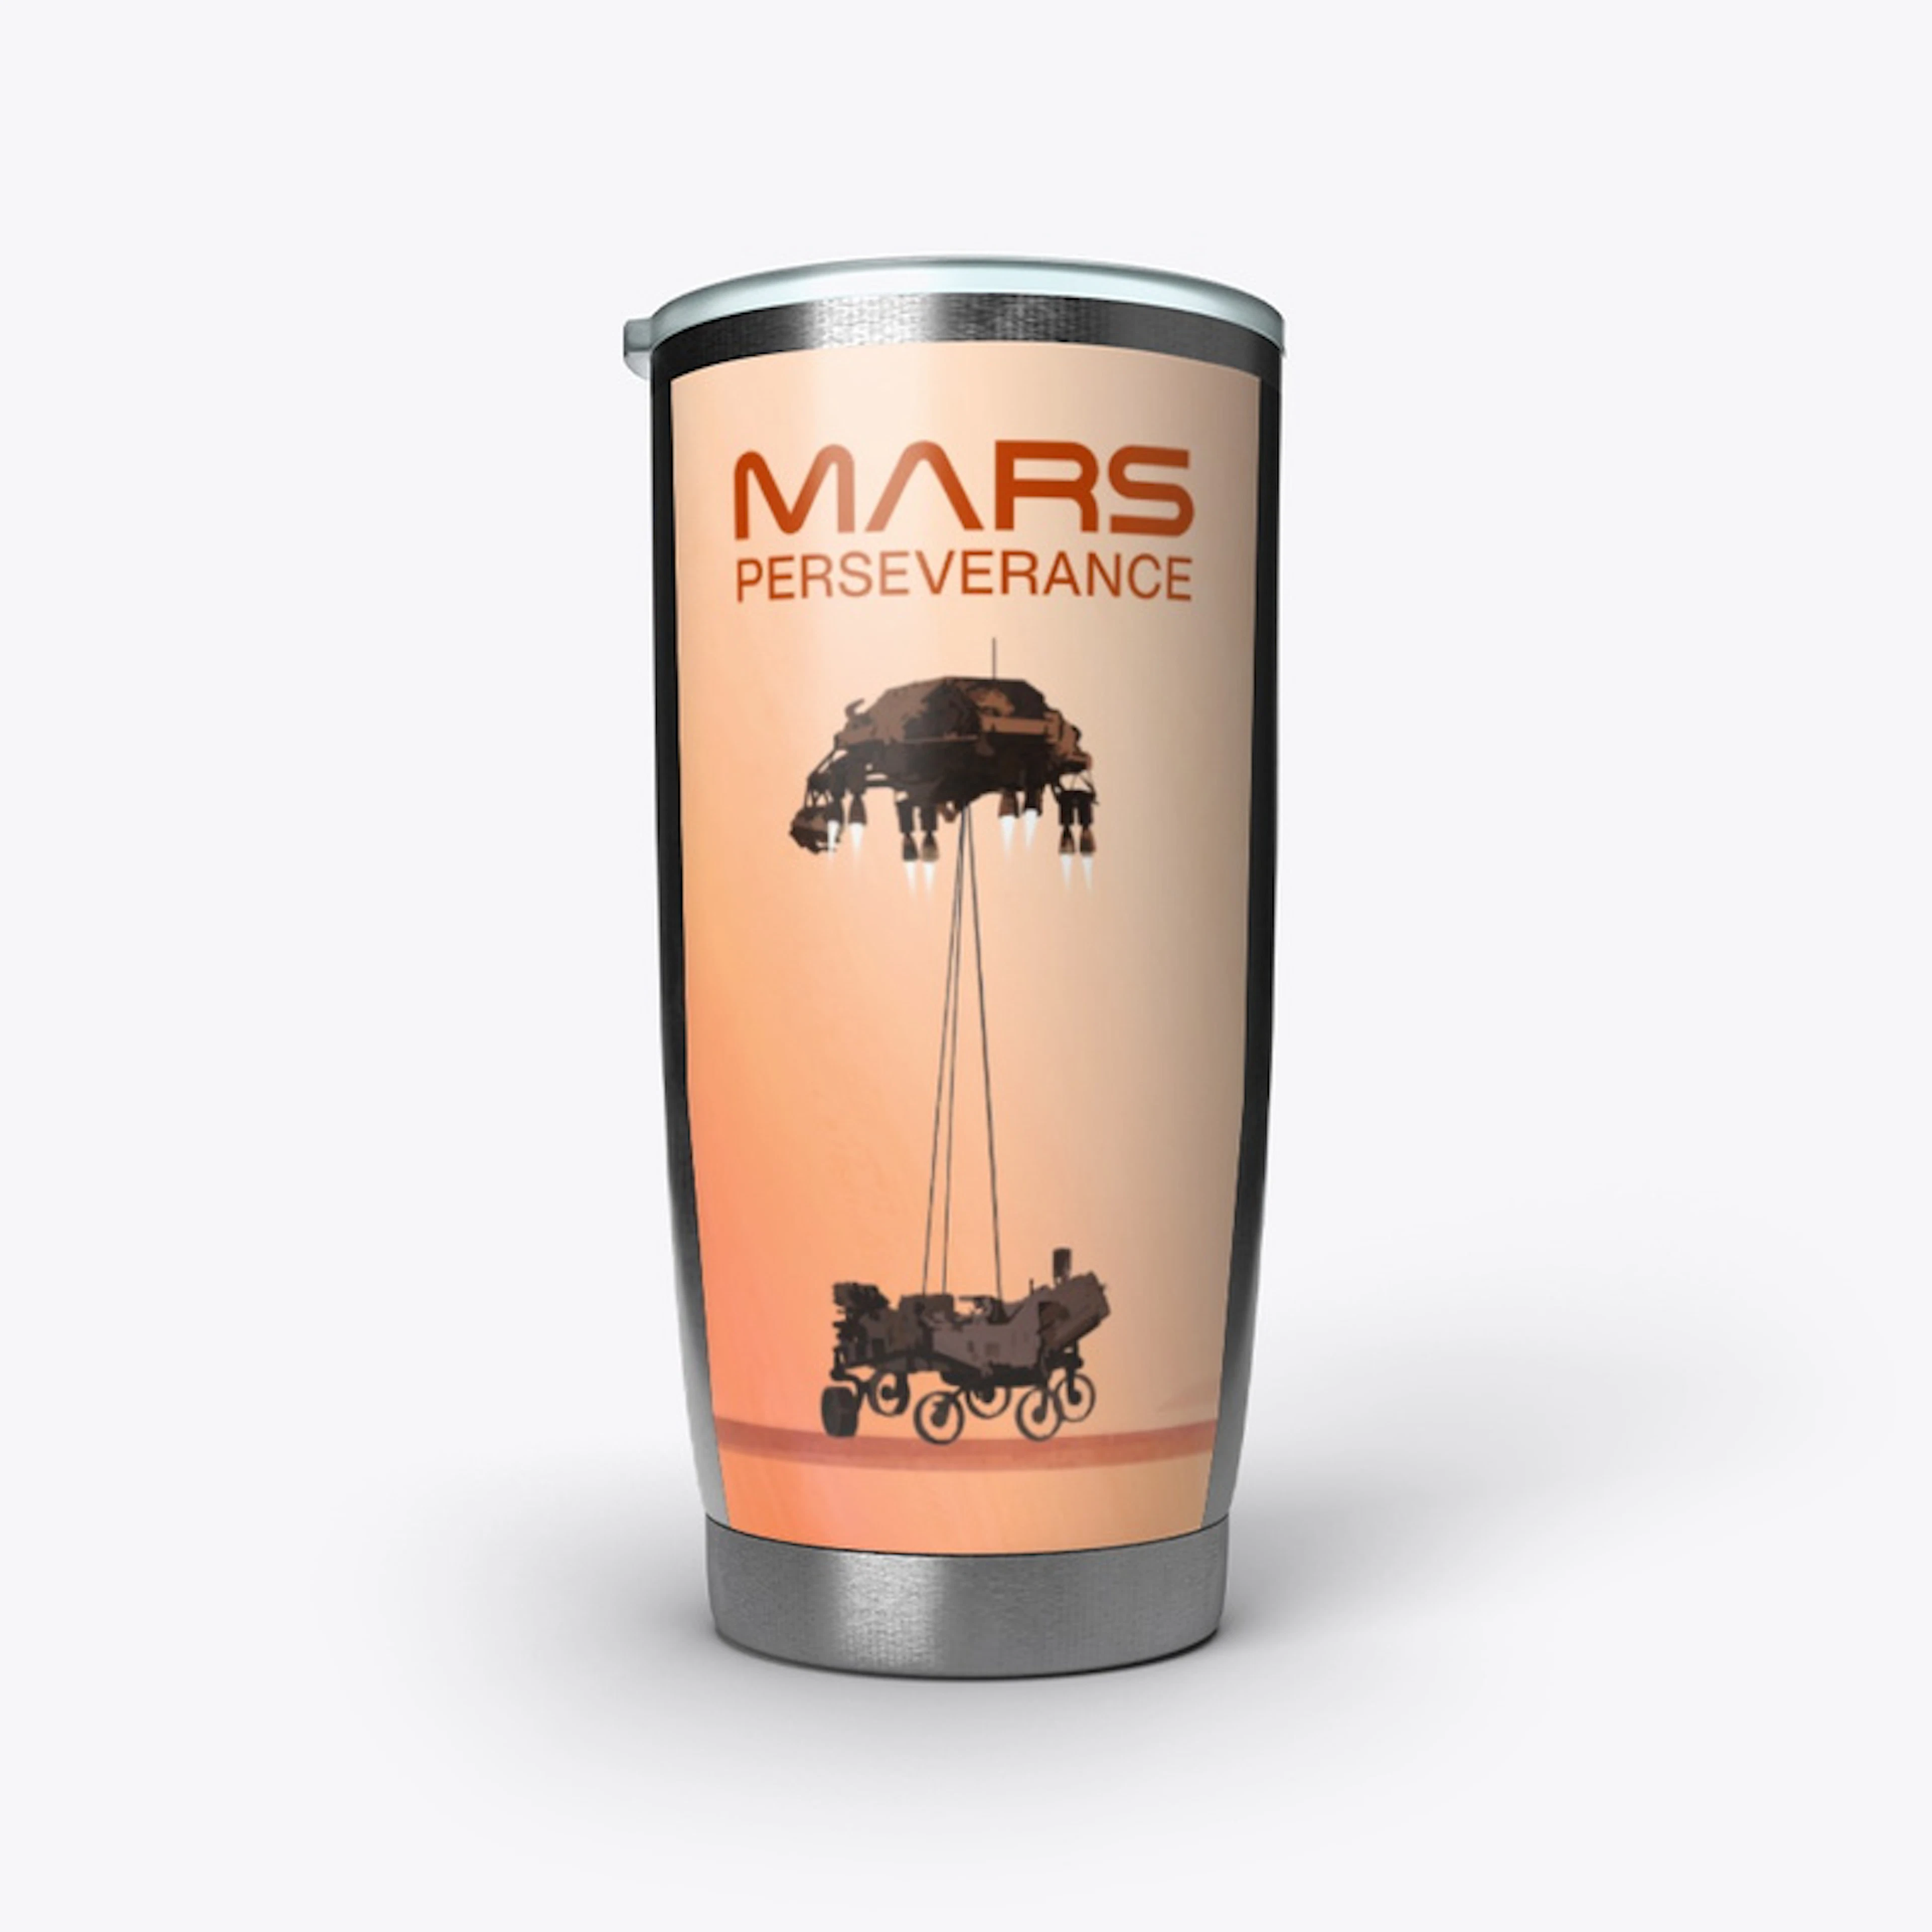 The Mars Dream